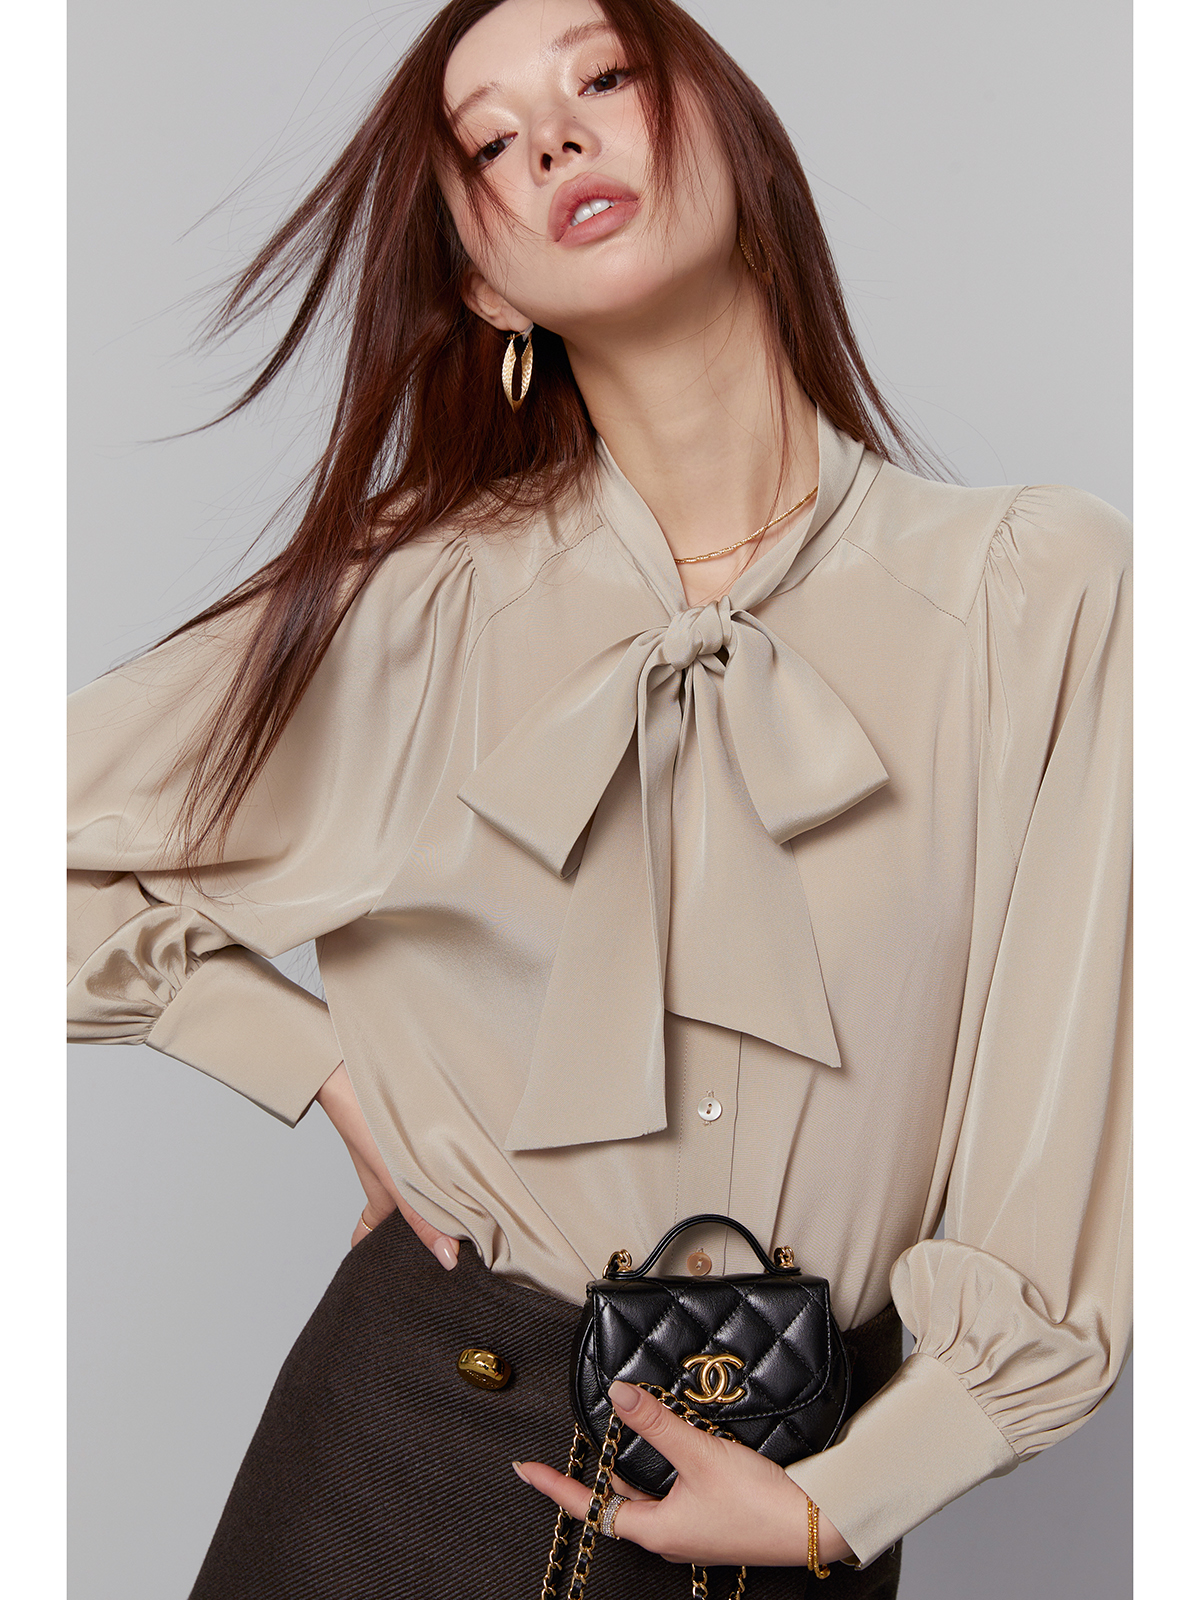 LICKYSENIOR升级品质线 重绉桑蚕丝飘带法式衬衫女秋冬款内搭上衣